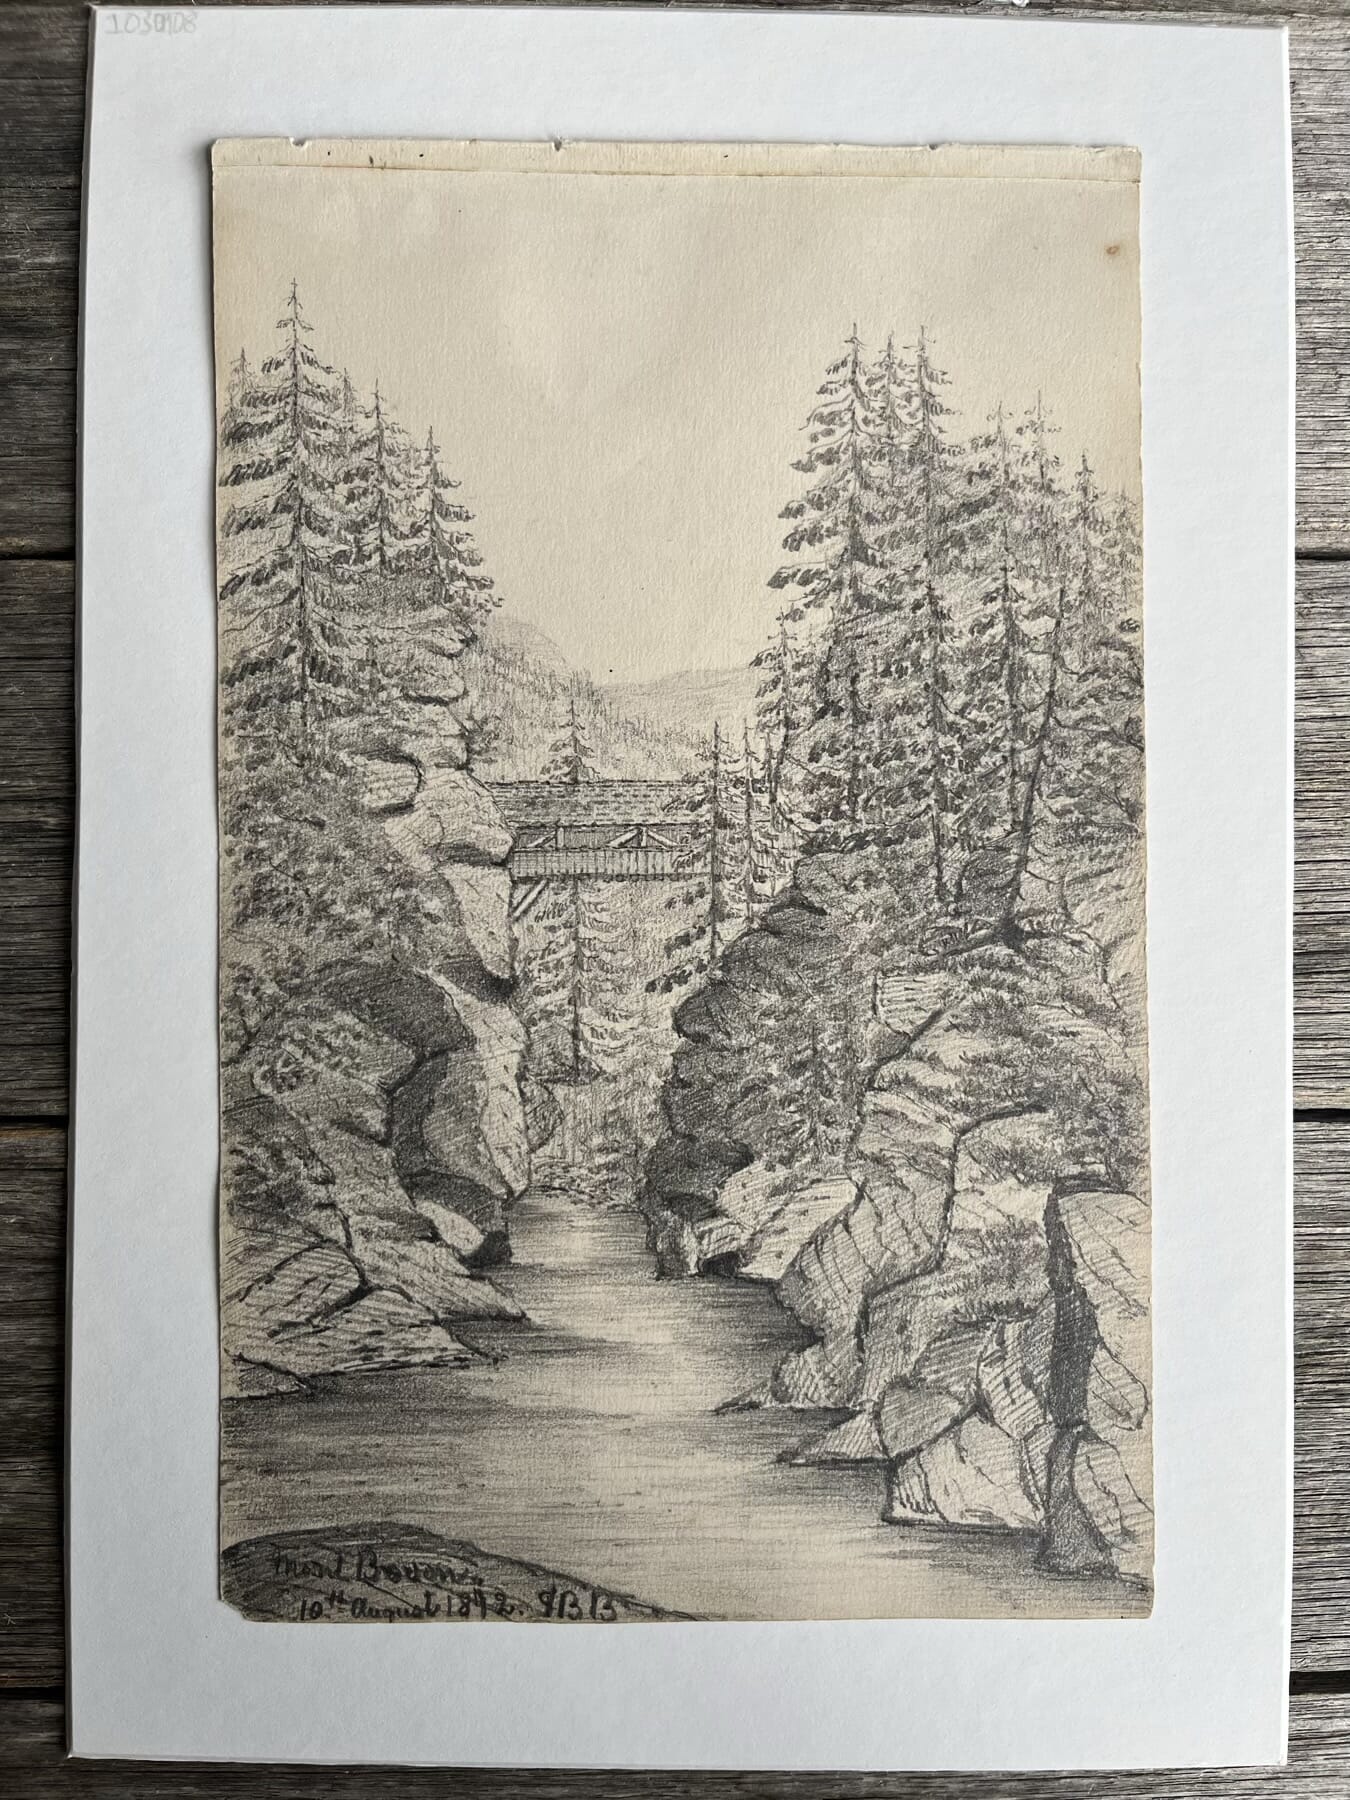 ArtStation - Nature Landscape Pencil Sketch